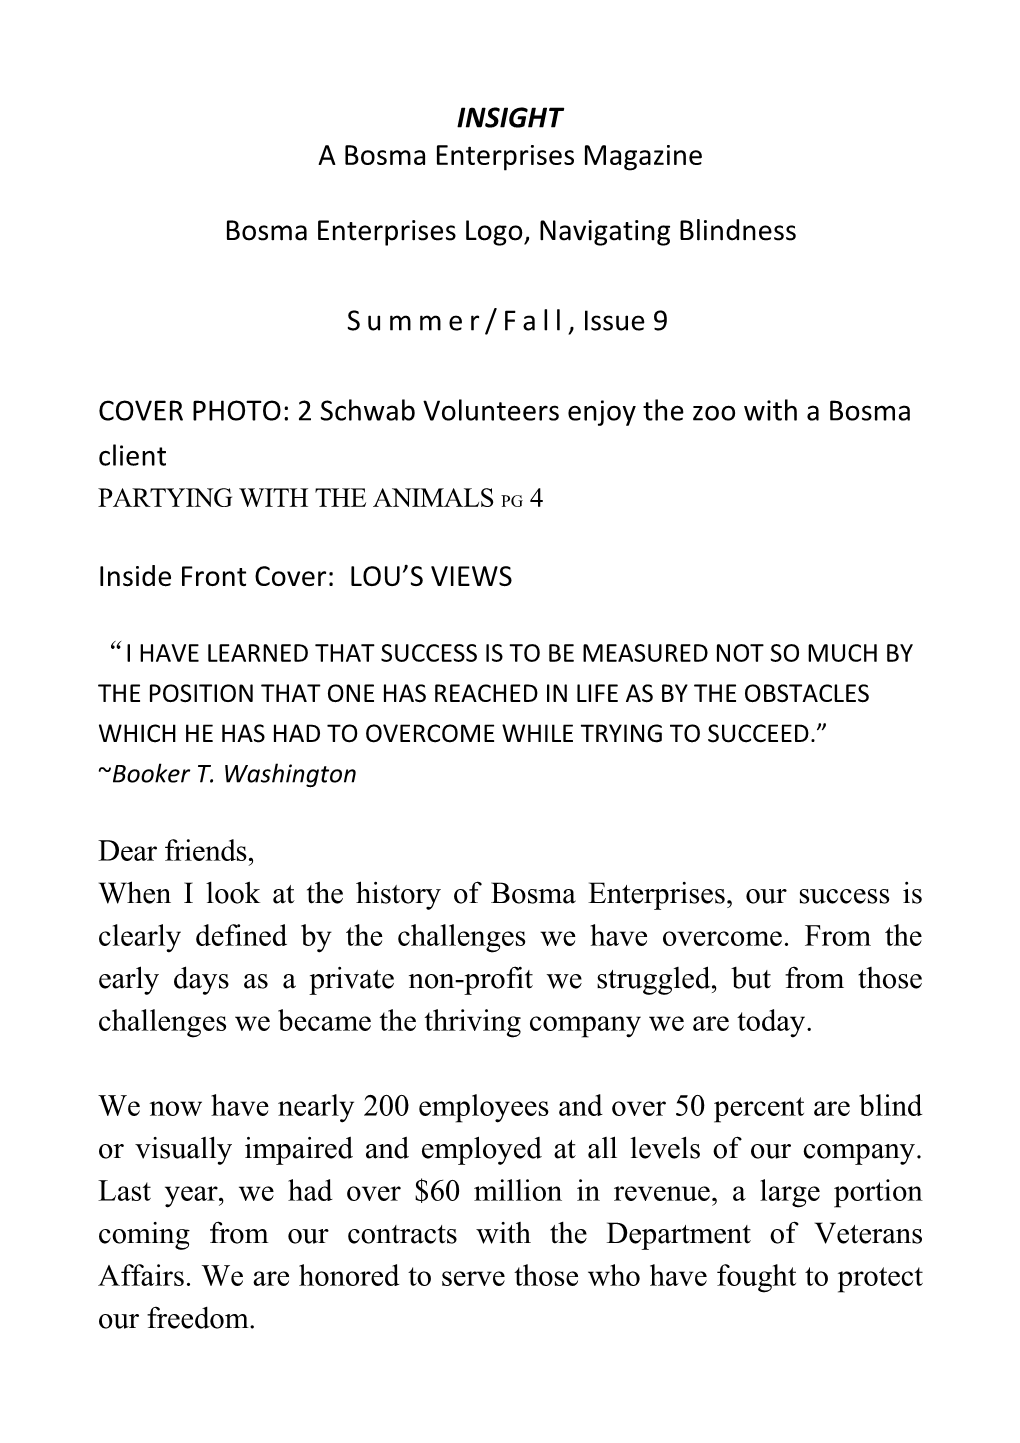 Bosma Enterprises Logo, Navigating Blindness